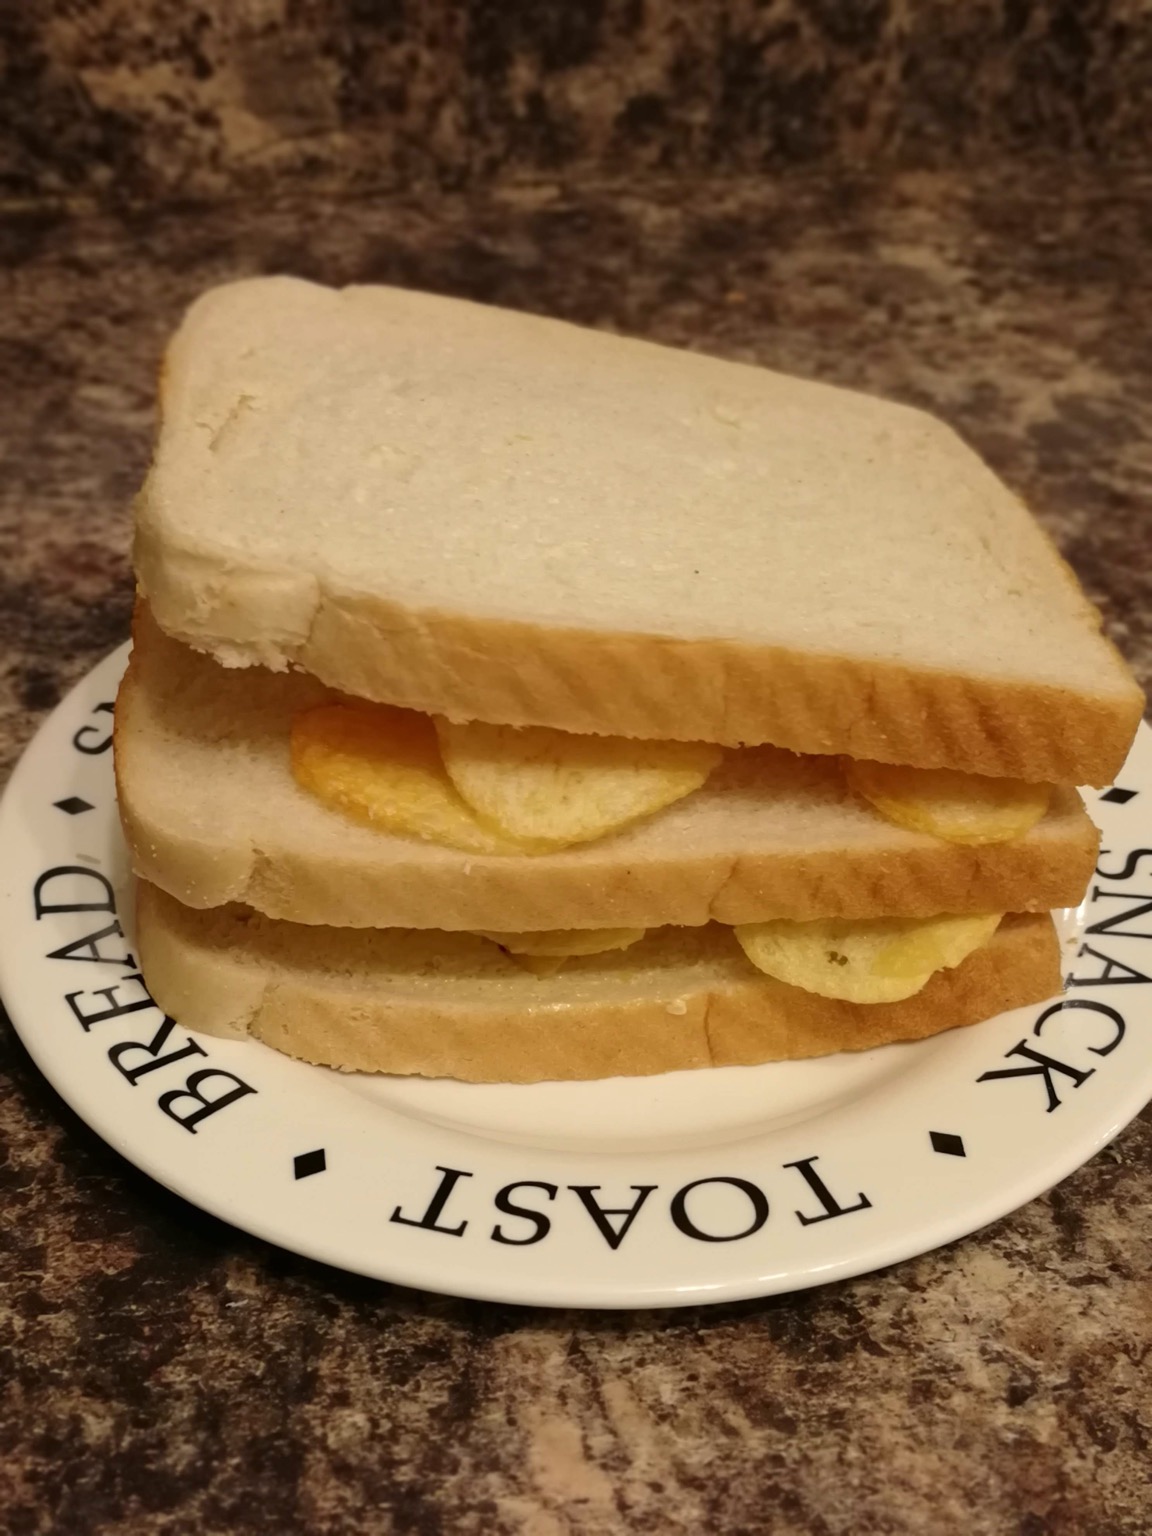 Double decker white bread potato crisp sandwich